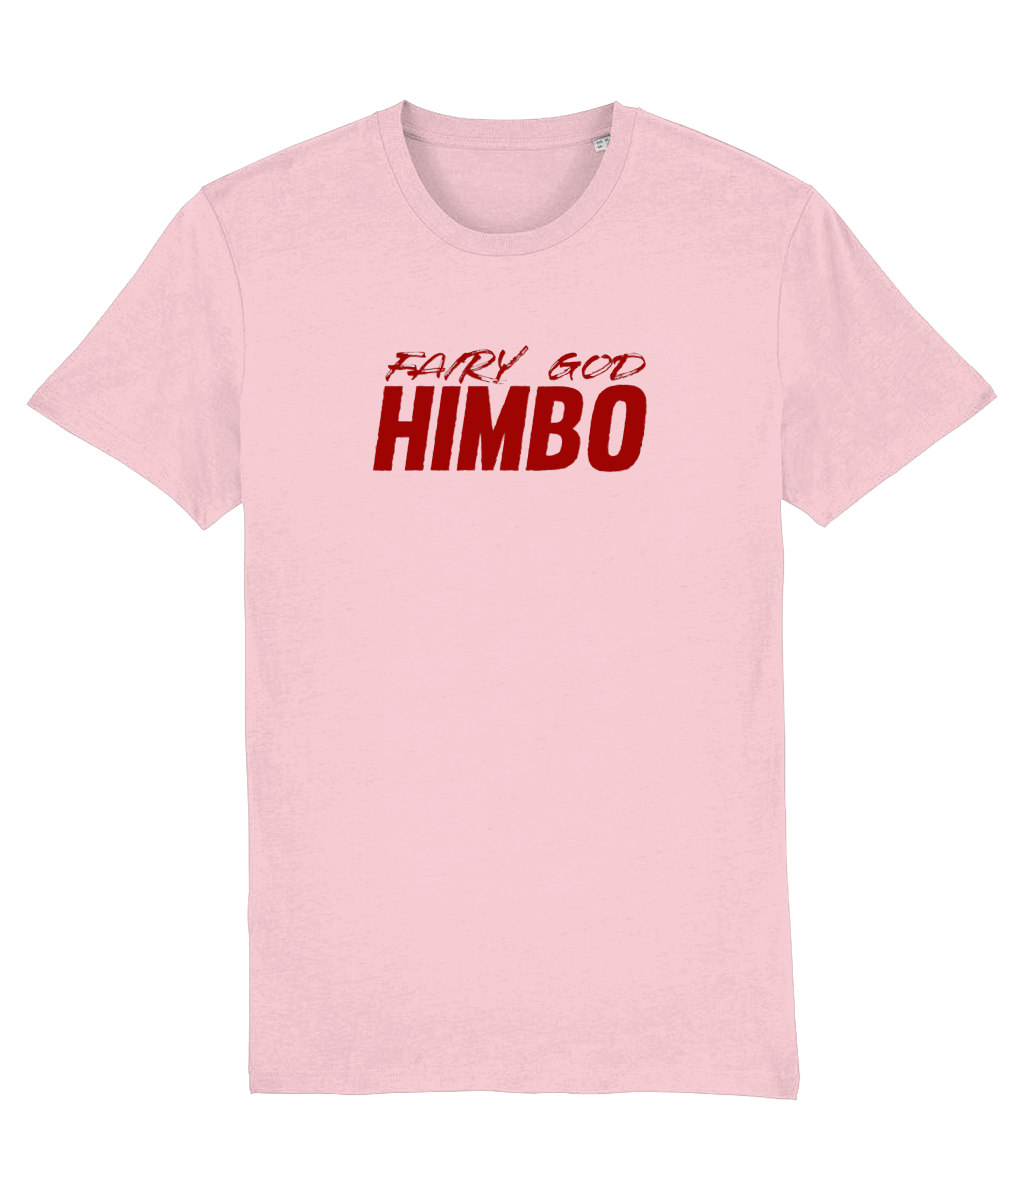 Fairy God Himbo Organic Cotton T-shirt